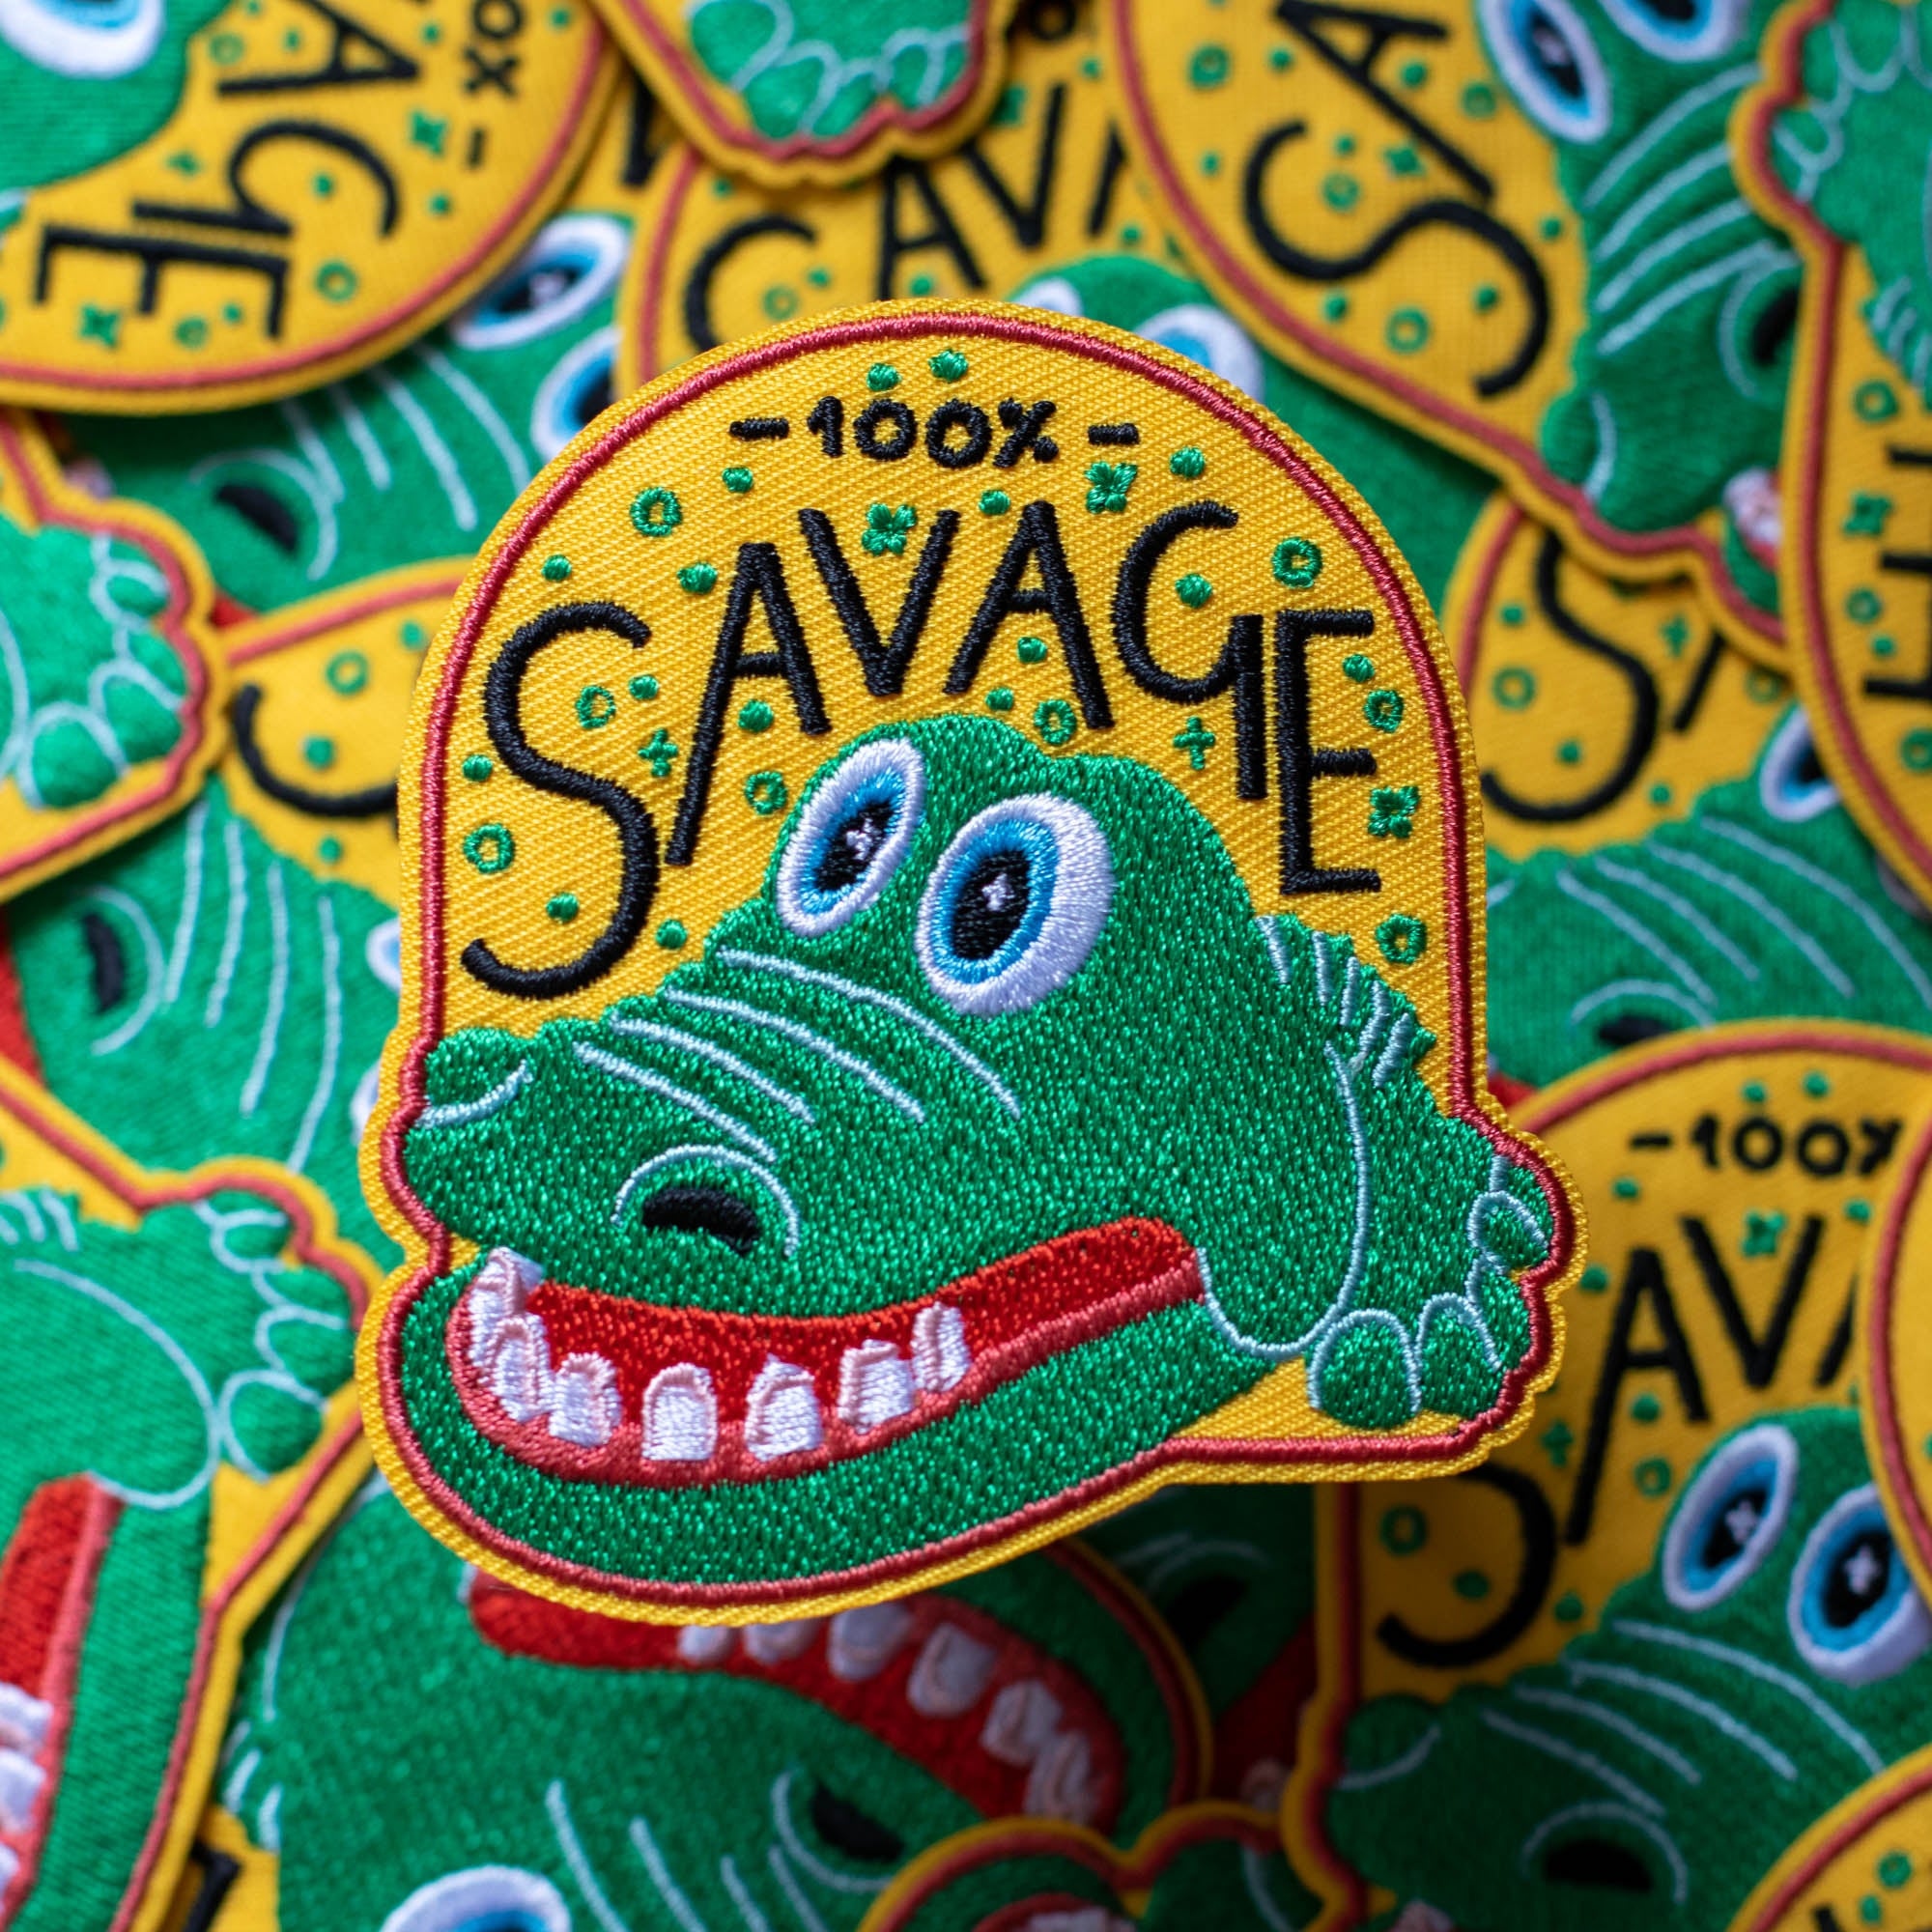 100% Savage Crocodile Game Patch